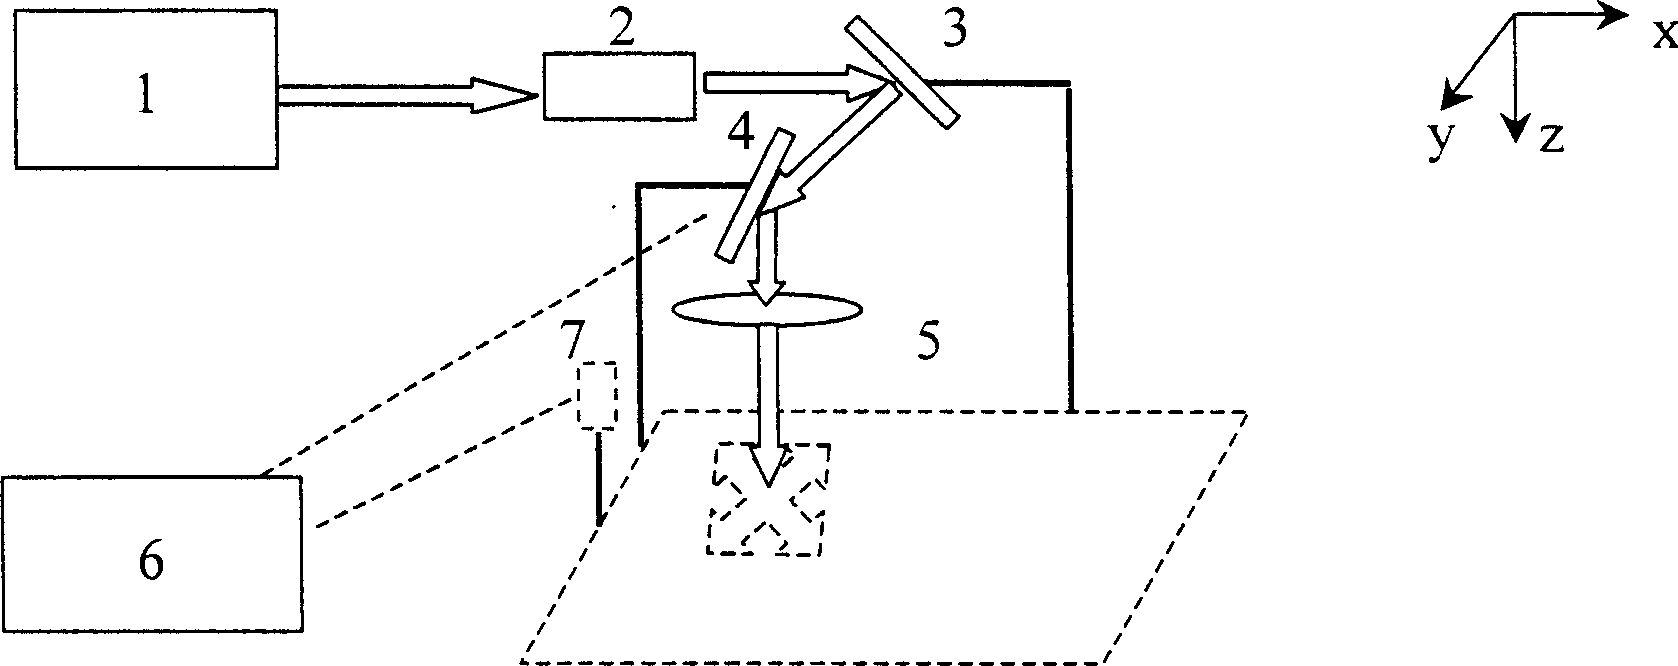 Laser internal engraving apparatus for transparent material